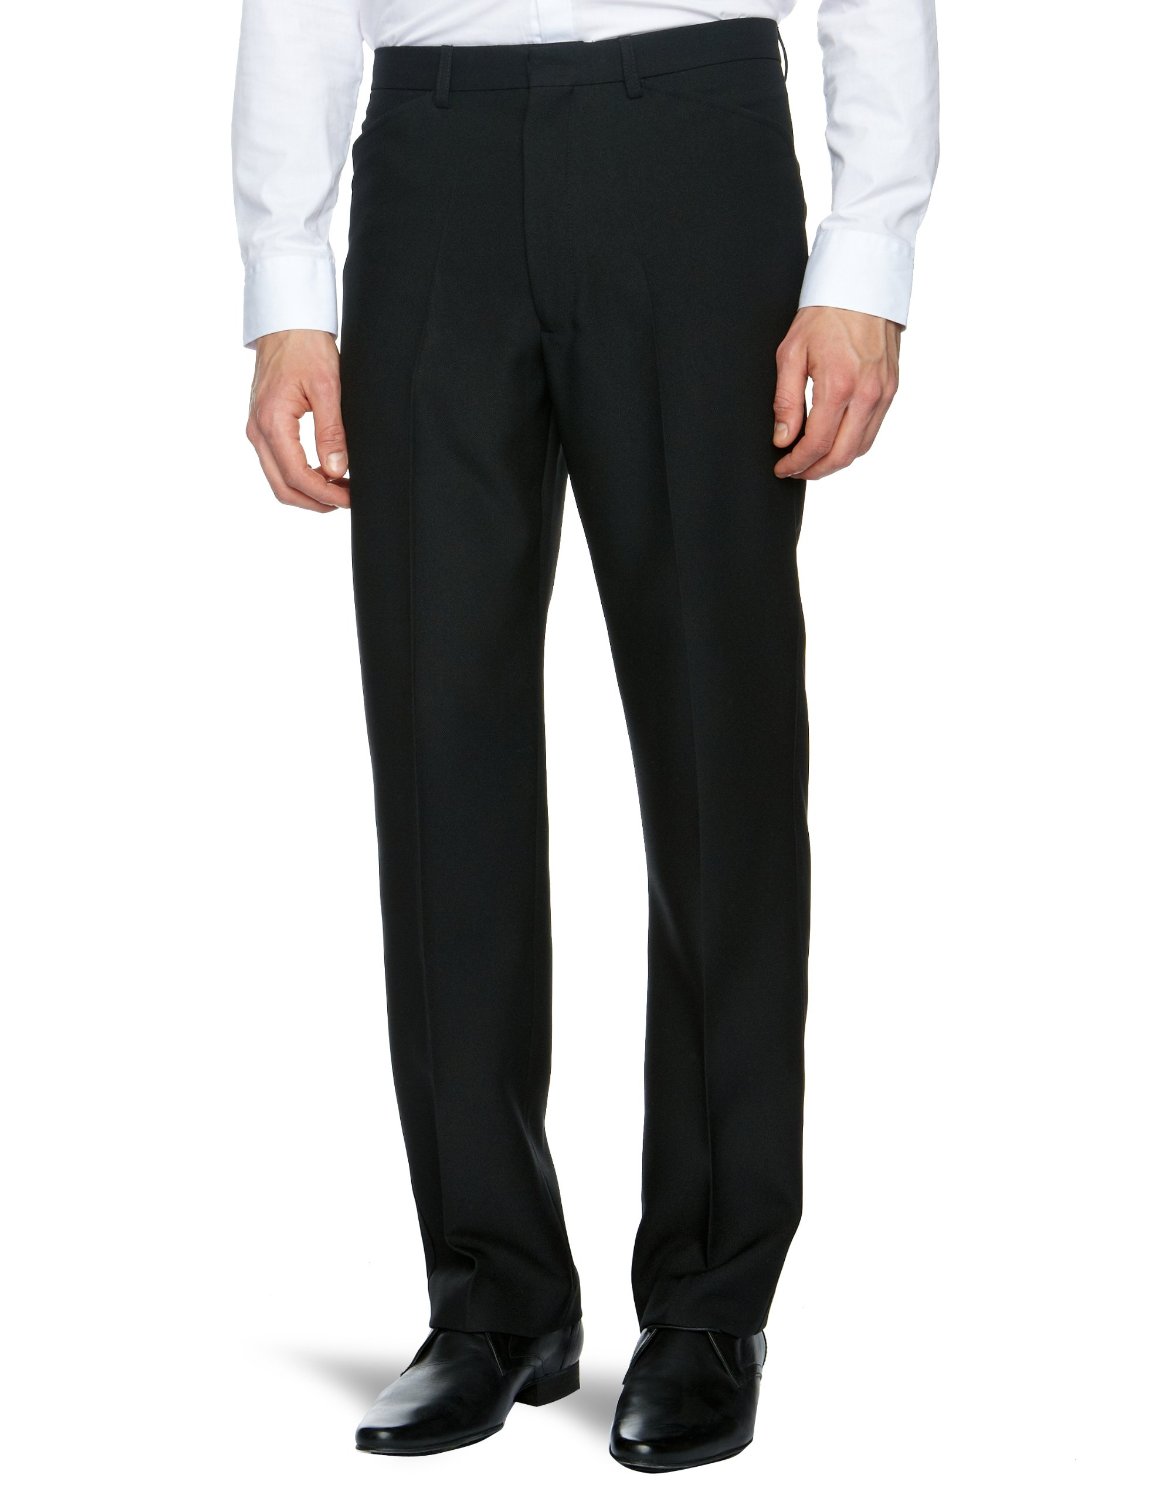 New Men's Farah Trousers Black Hopsack Weave Smart Classic Formal Anti ...